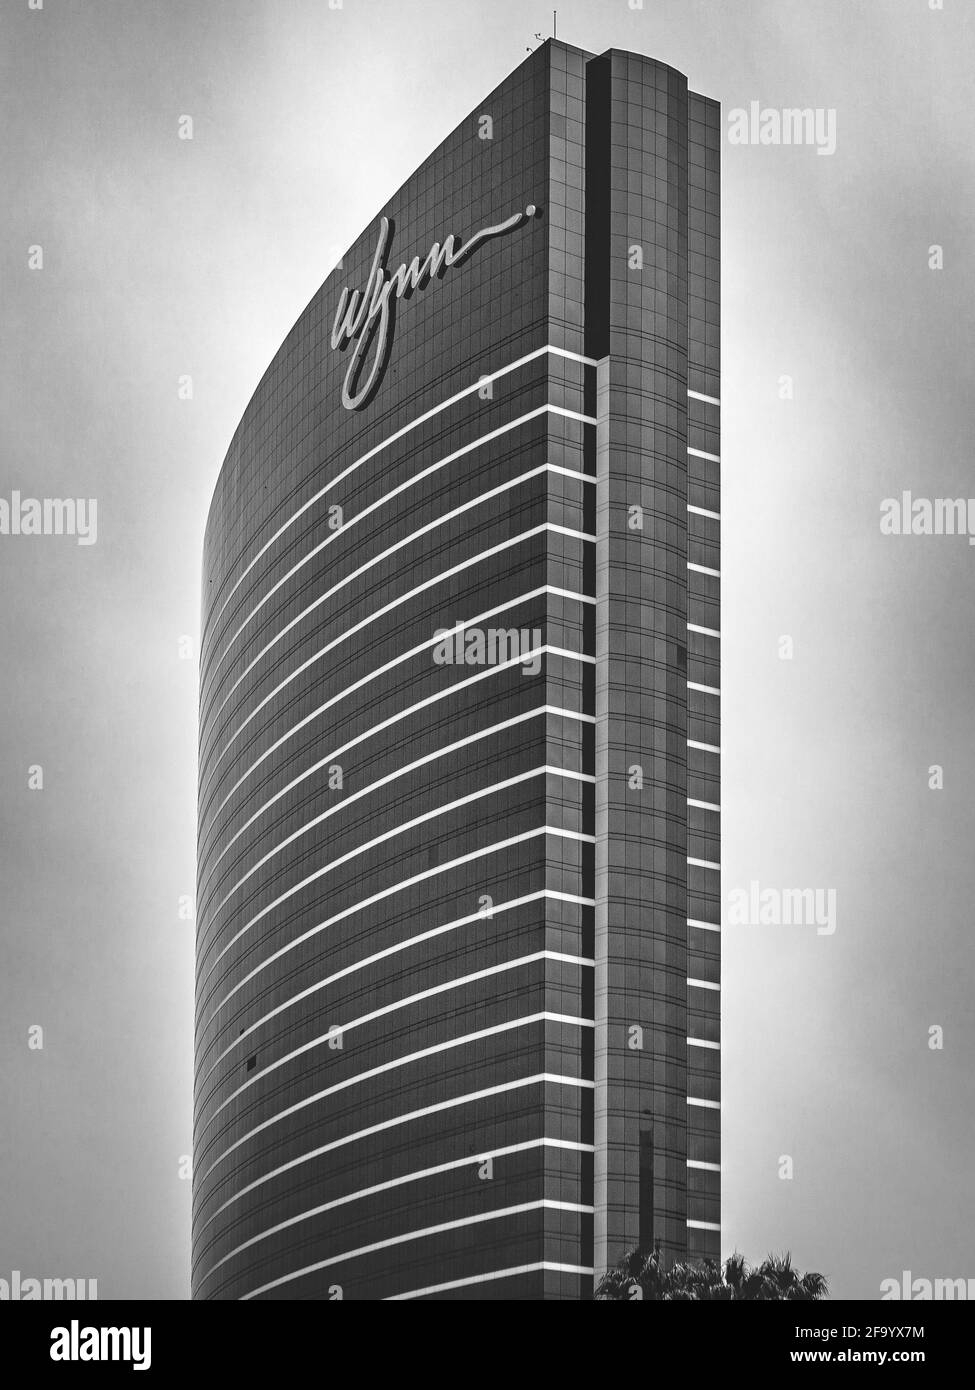 Wynn Luxury Resort, Seitenaufnahme, oberer Teil, Las Vegas, Nevada, USA Stockfoto